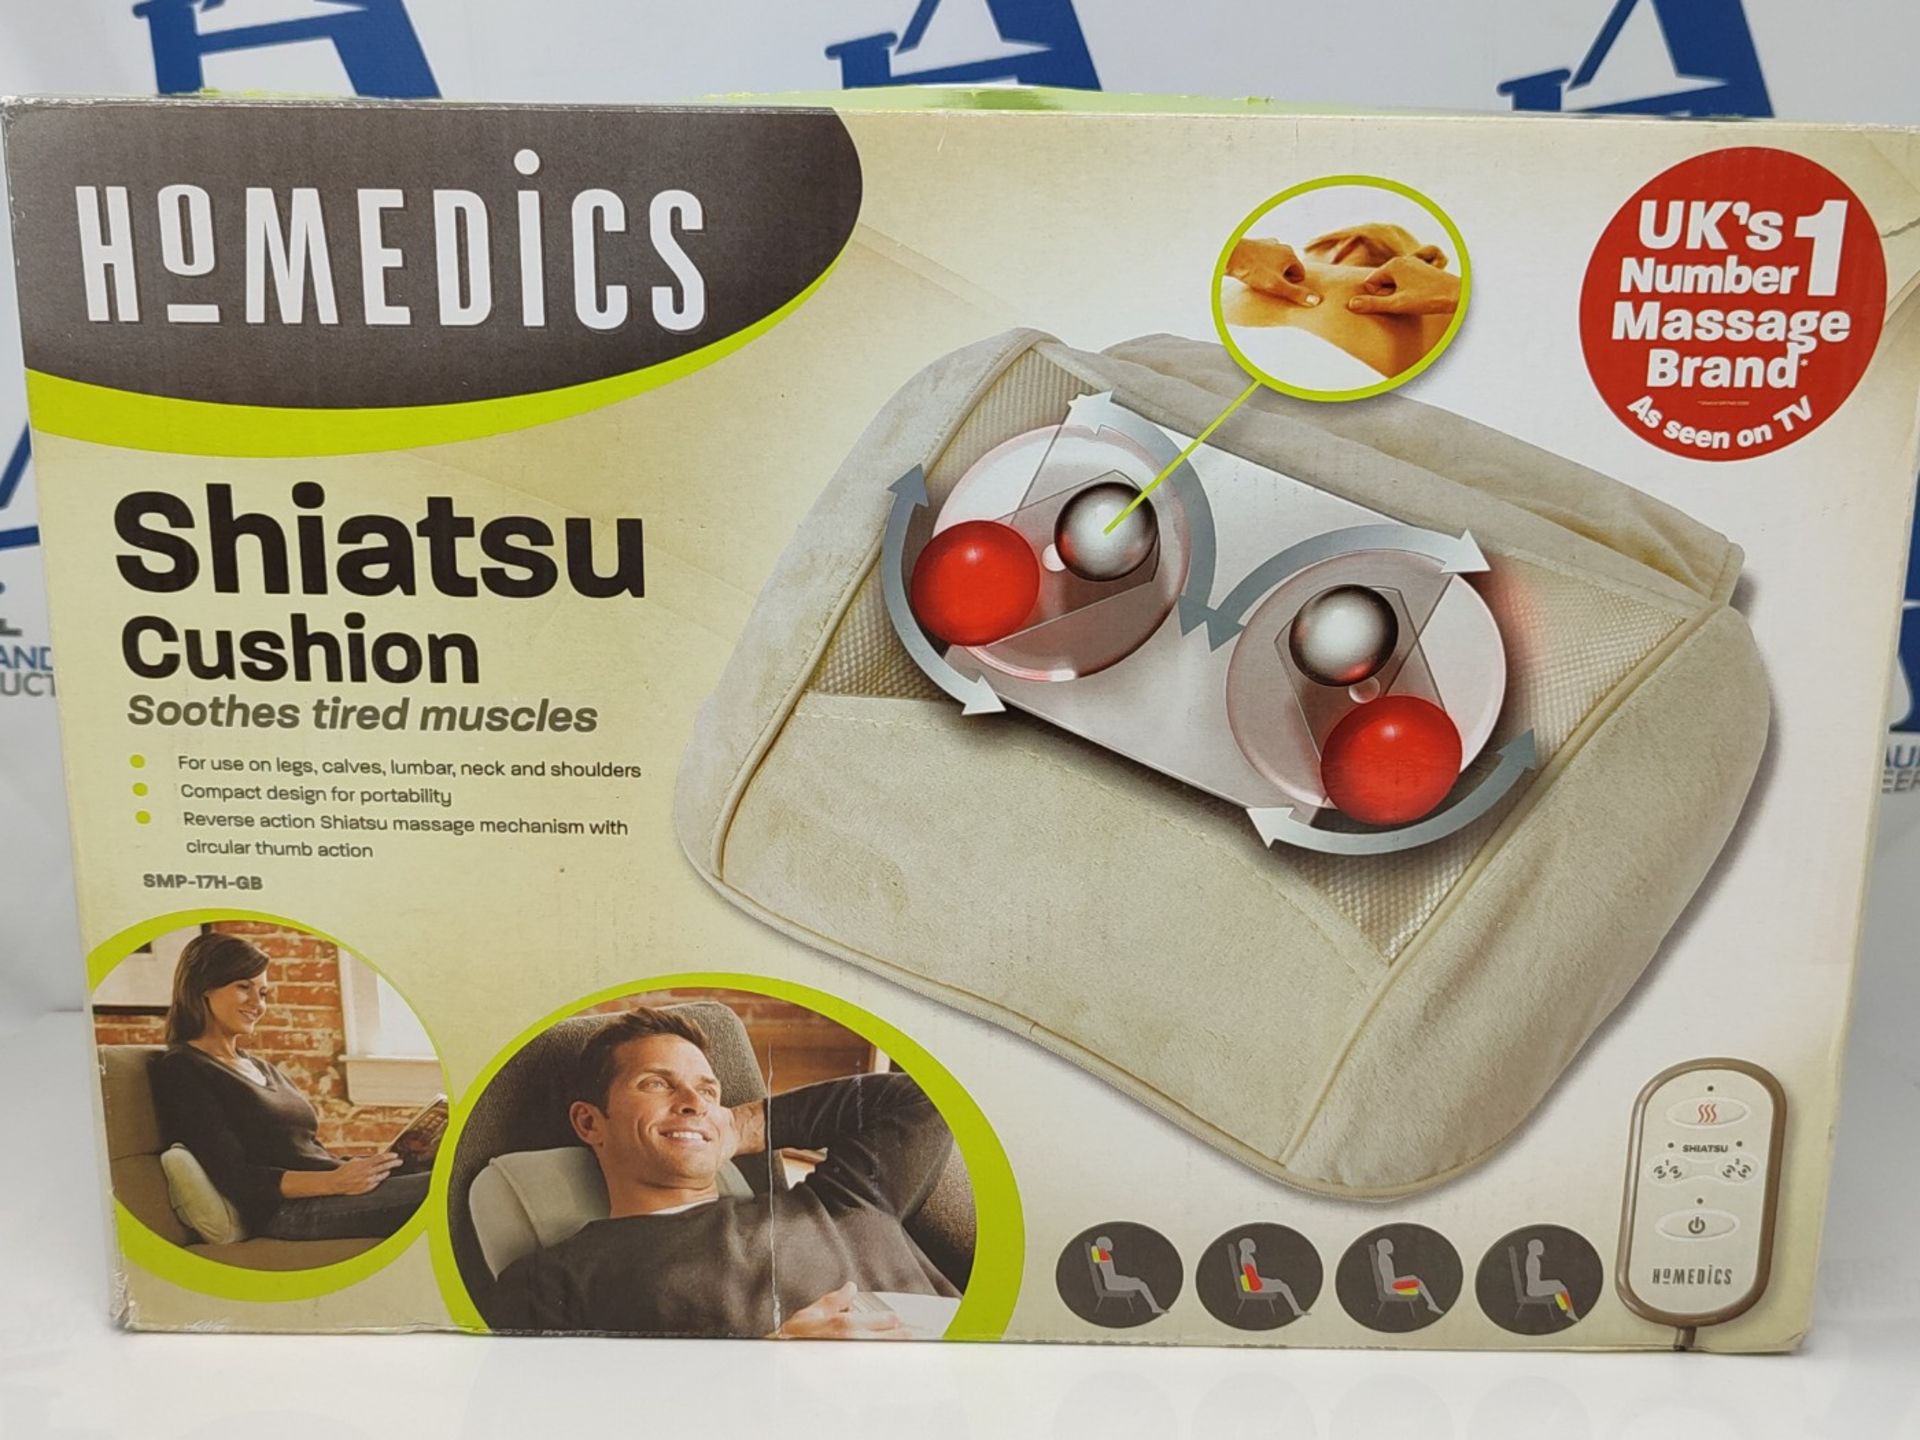 Homedics shiatsu cushion soothes tired muscles - Image 2 of 3